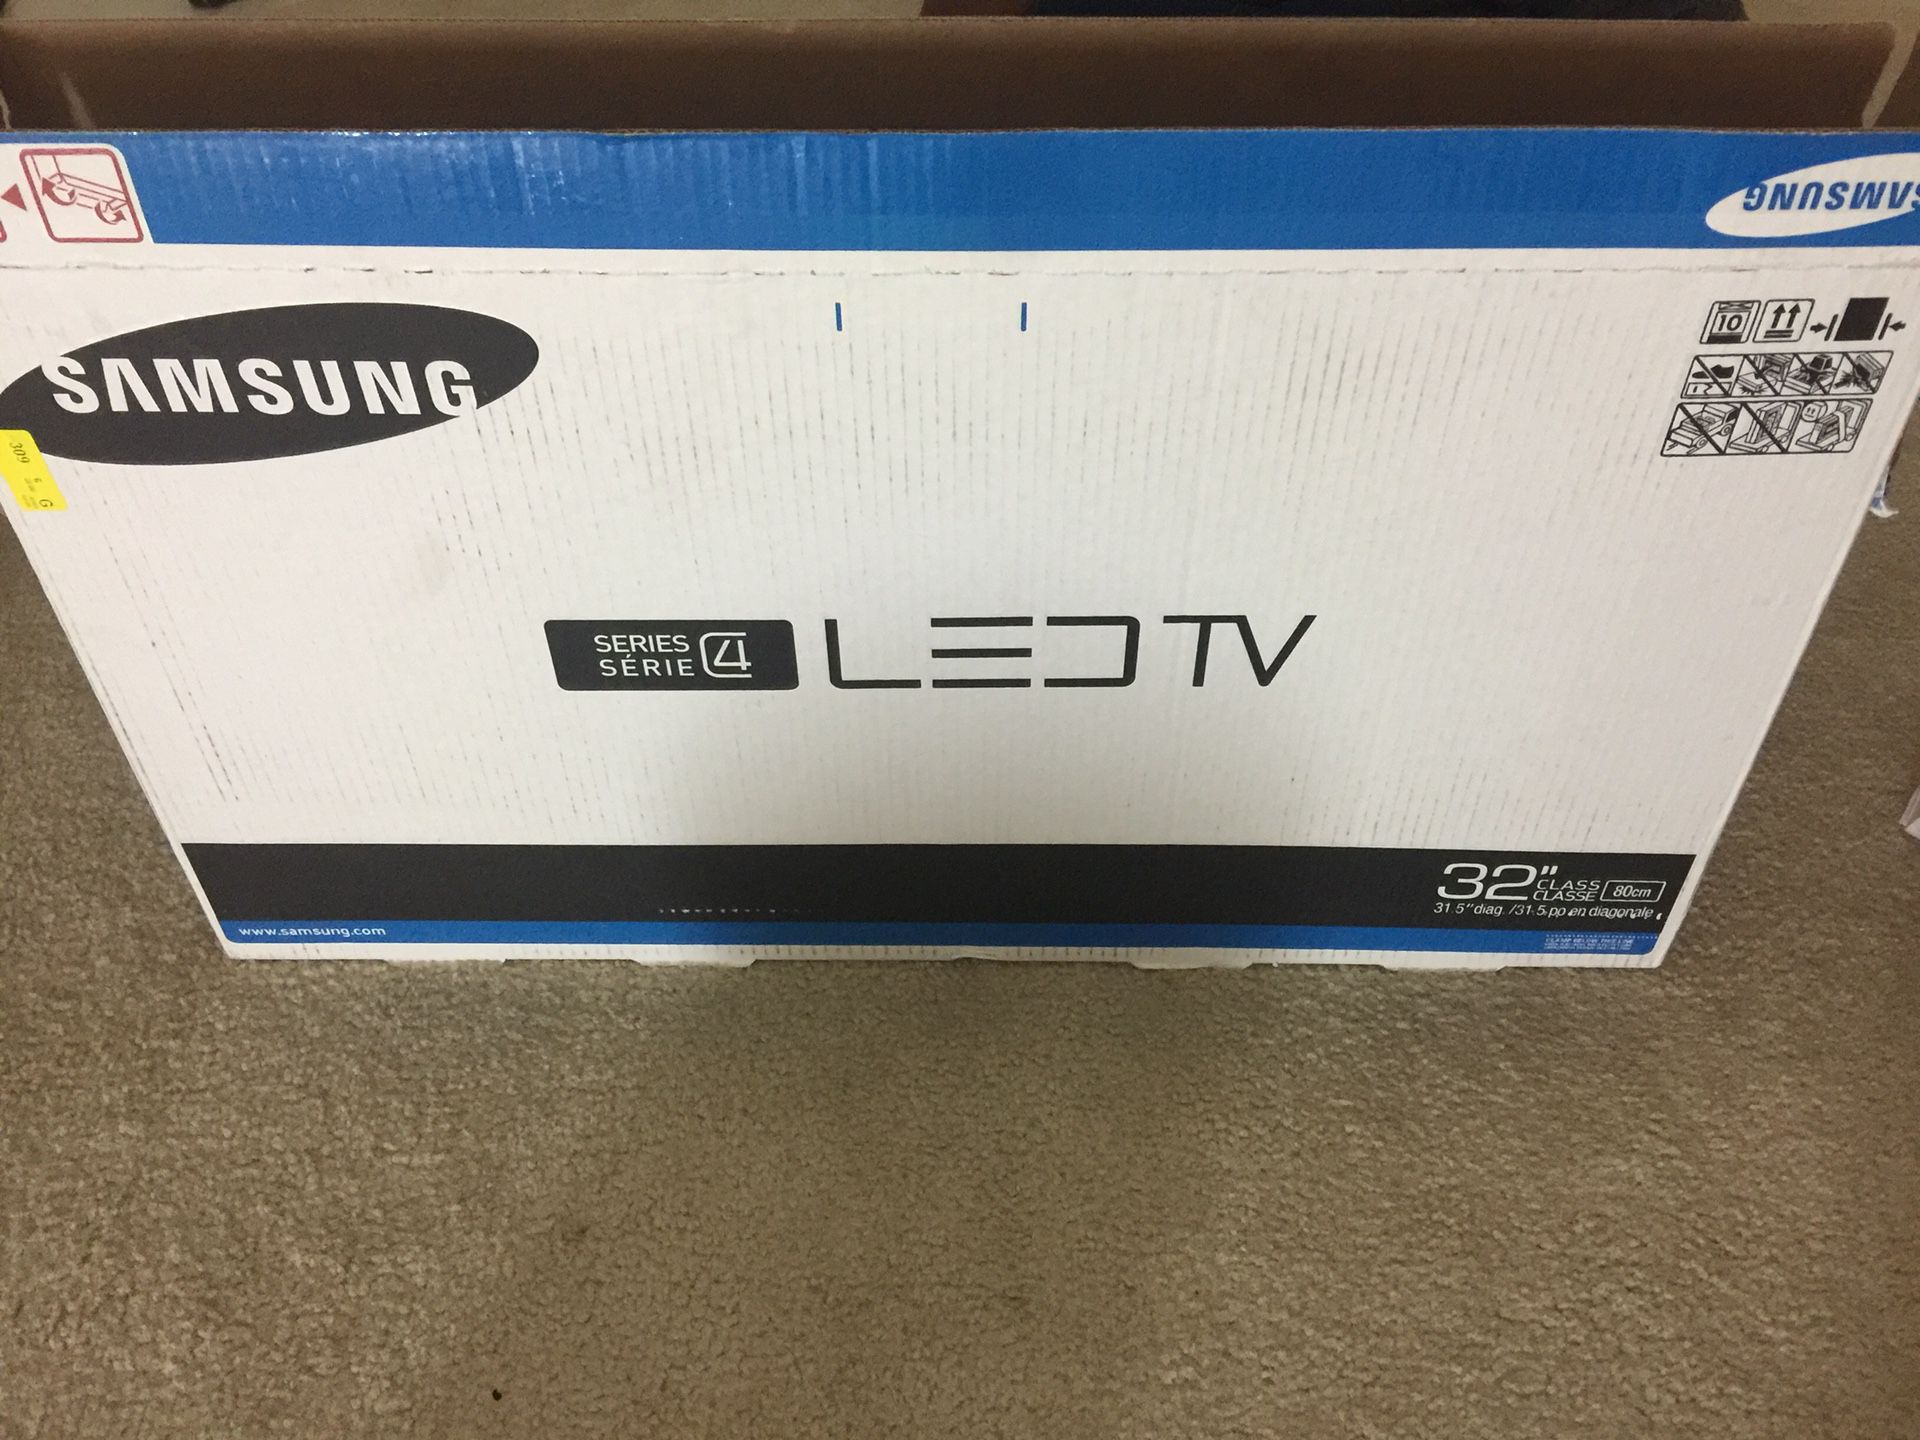 Samsung 32”inch tv